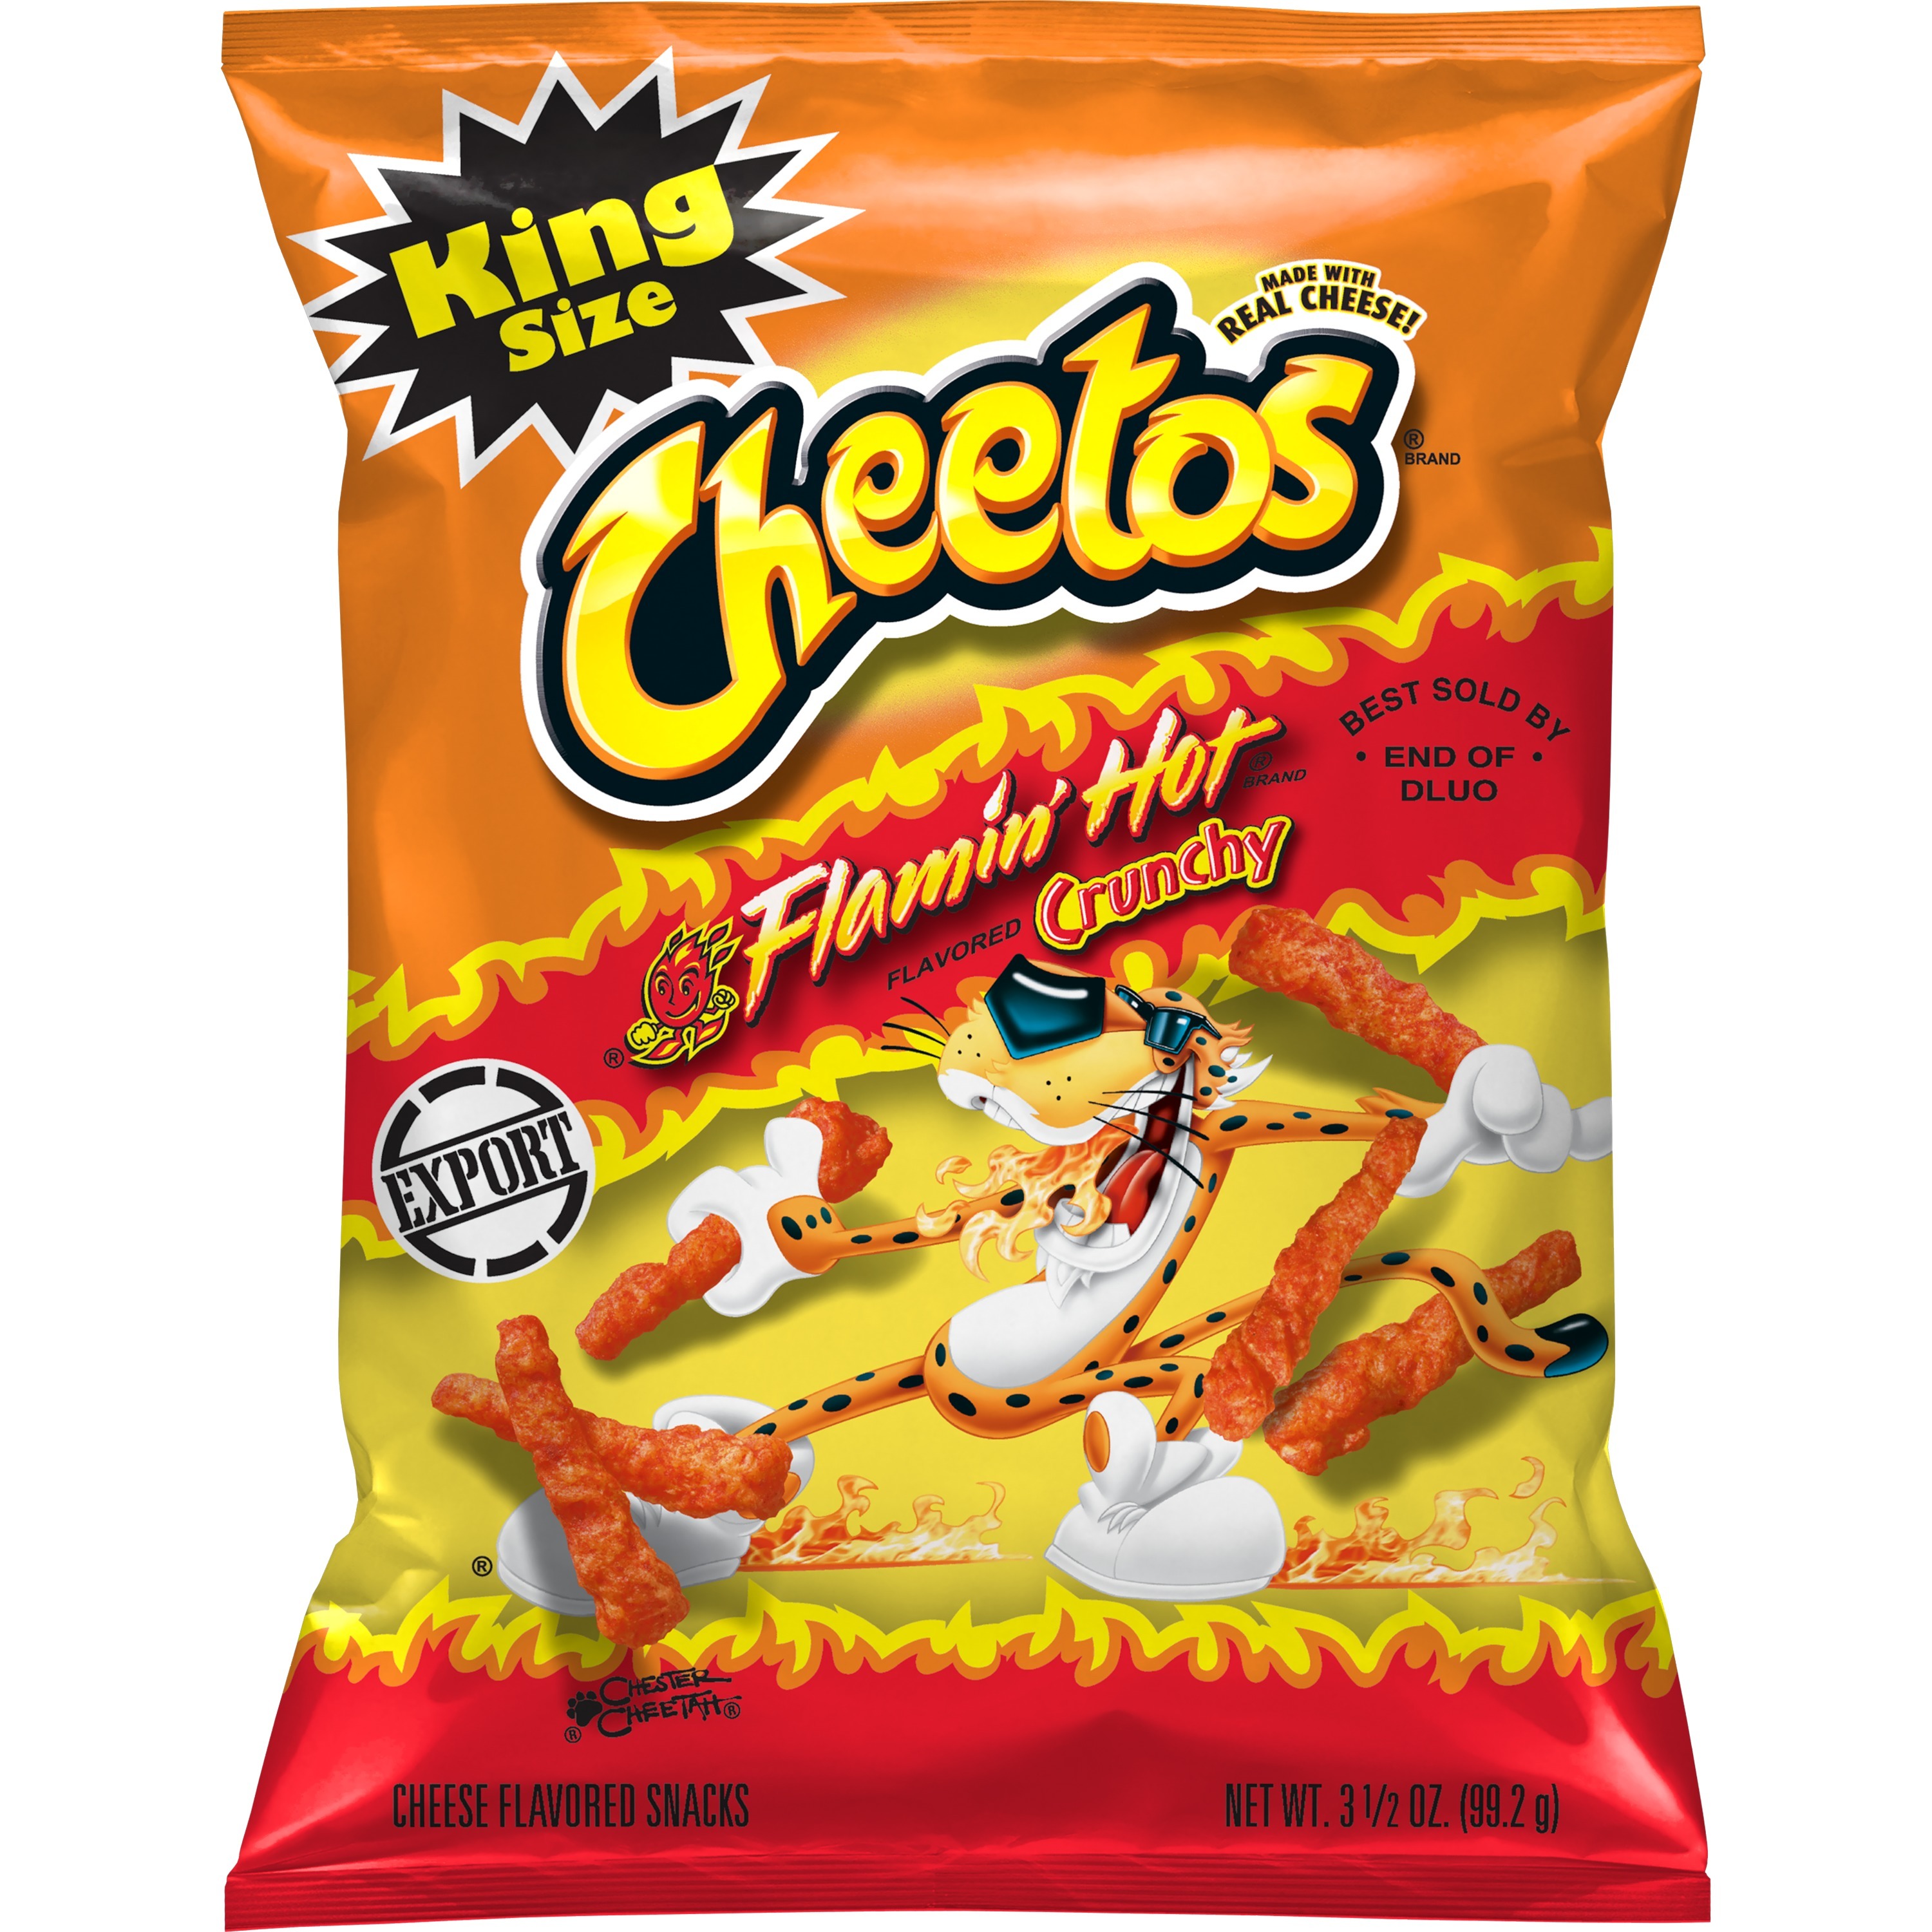 Cheetos Gustosines - Cheetos Jaune, Acheter